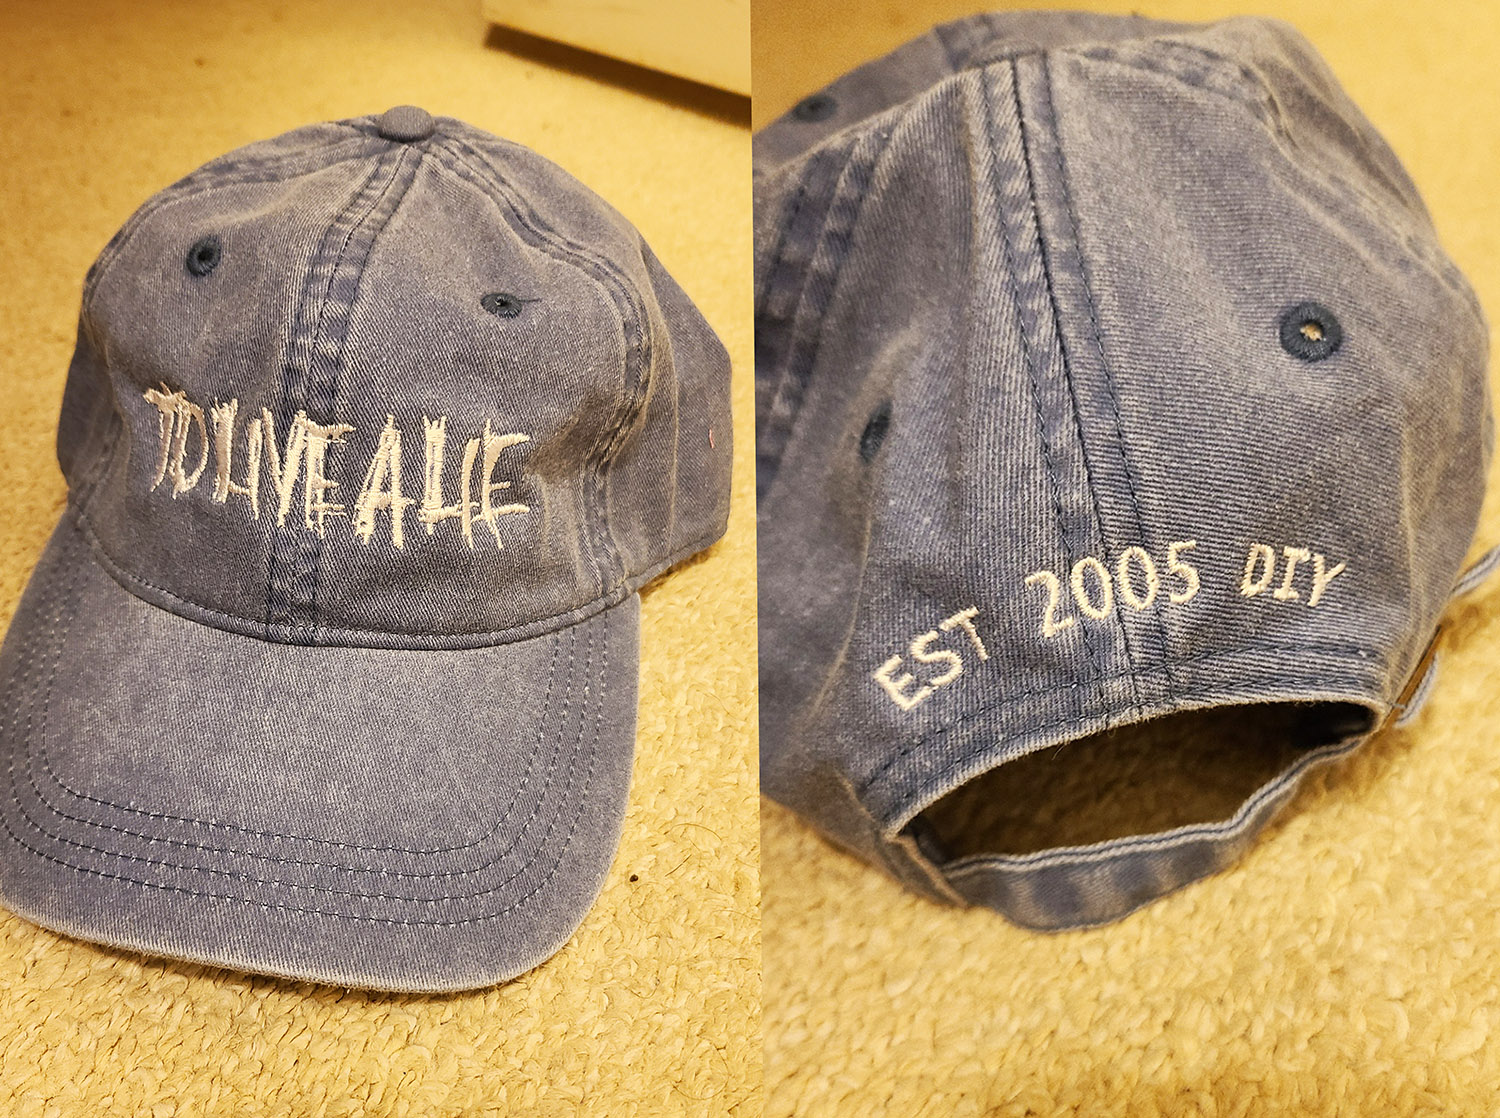 To Live A Lie - Since 2005 DIY Adjustable Dad Hats (tamale)